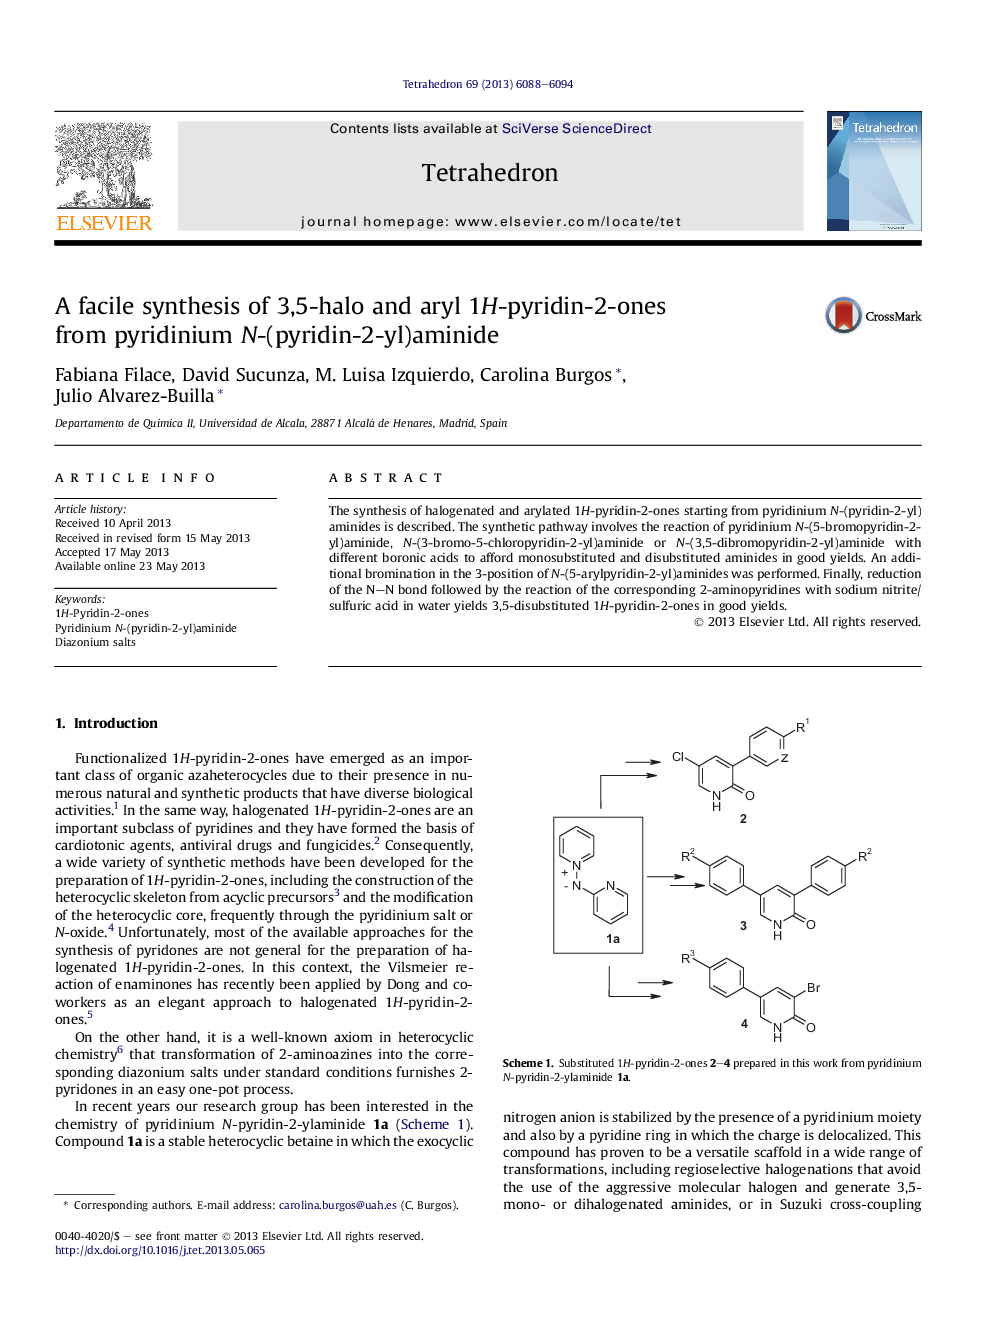 A facile synthesis of 3,5-halo and aryl 1H-pyridin-2-ones fromÂ pyridinium N-(pyridin-2-yl)aminide